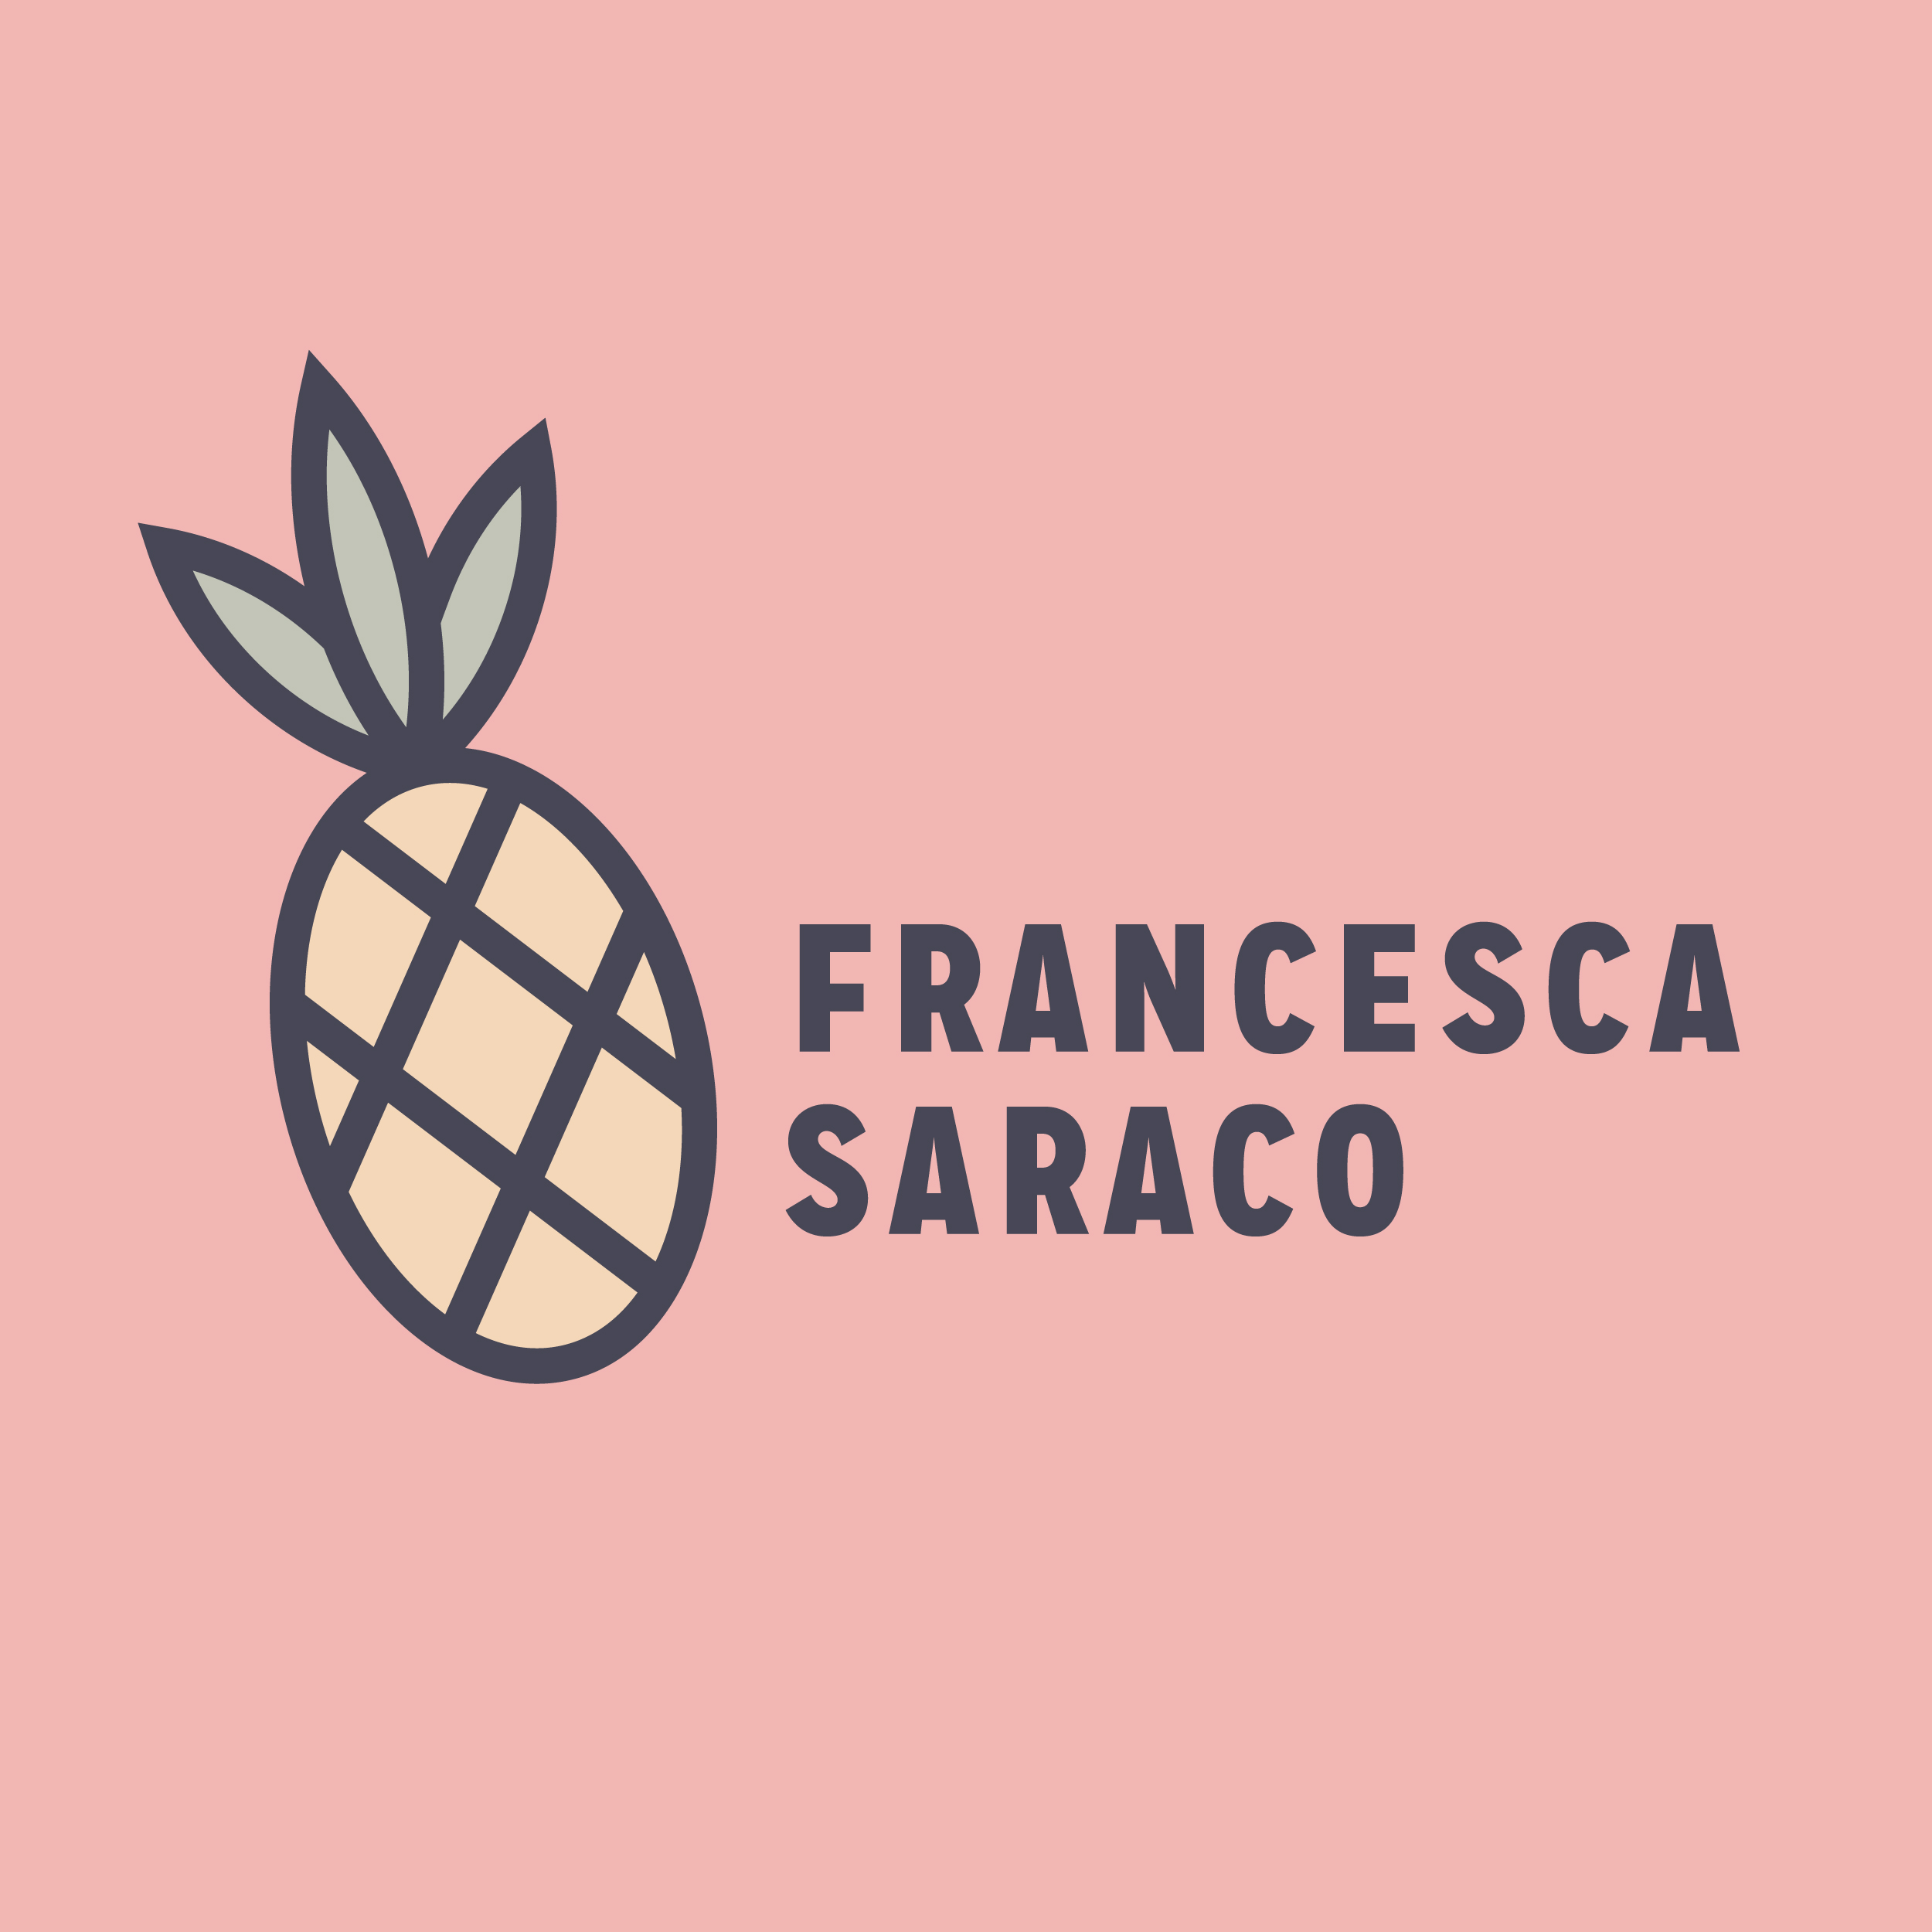 FRANCESCA SARACO